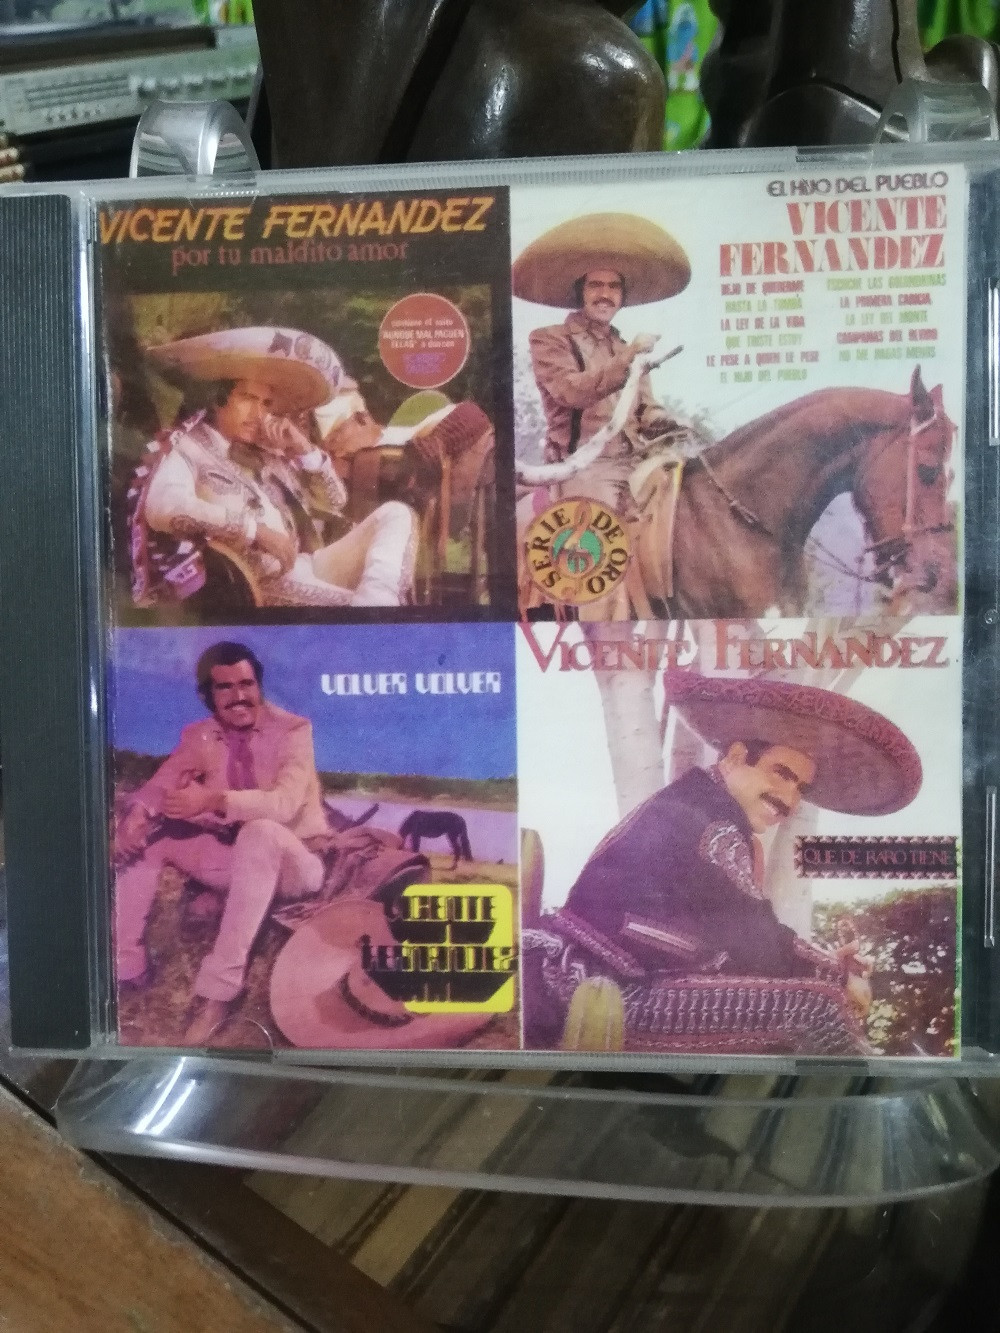 Imagen CD VICENTE FERNANDEZ - SUPER EXITOS